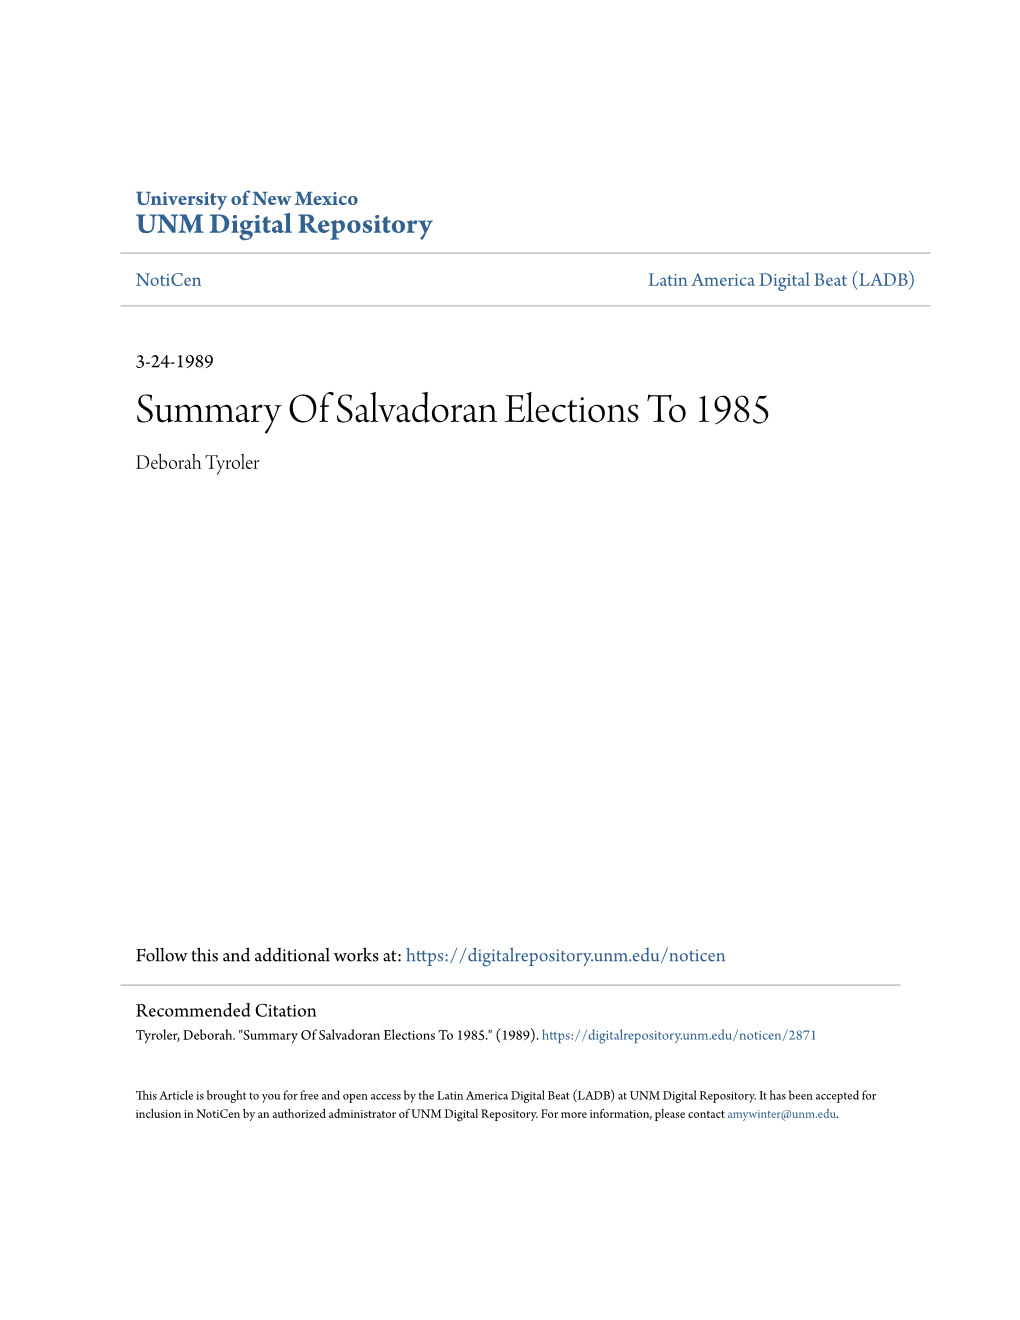 Summary of Salvadoran Elections to 1985 Deborah Tyroler